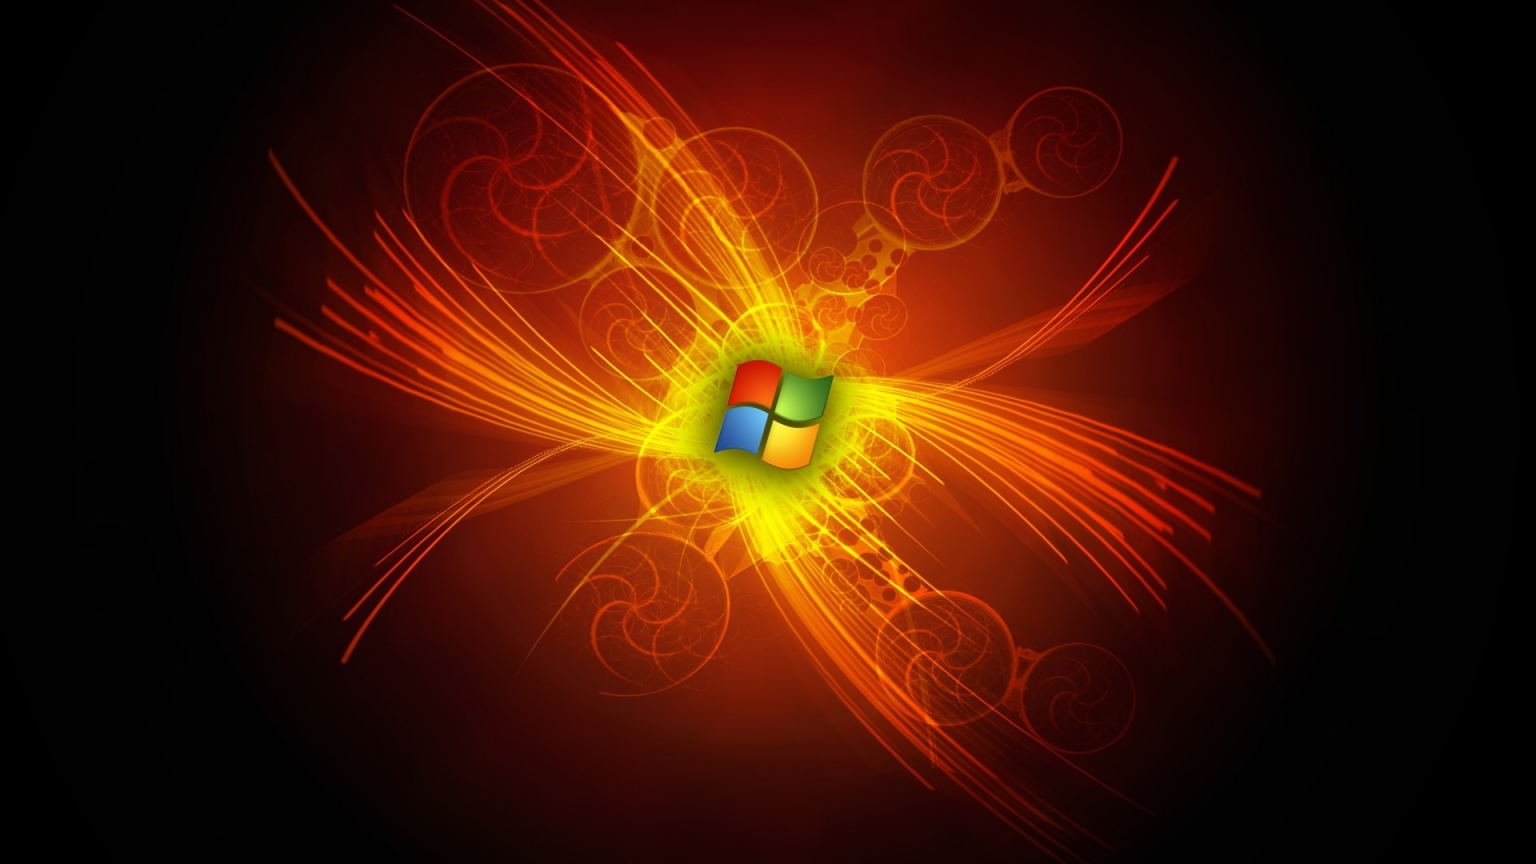 Microsoft Windows Logo for 1536 x 864 HDTV resolution